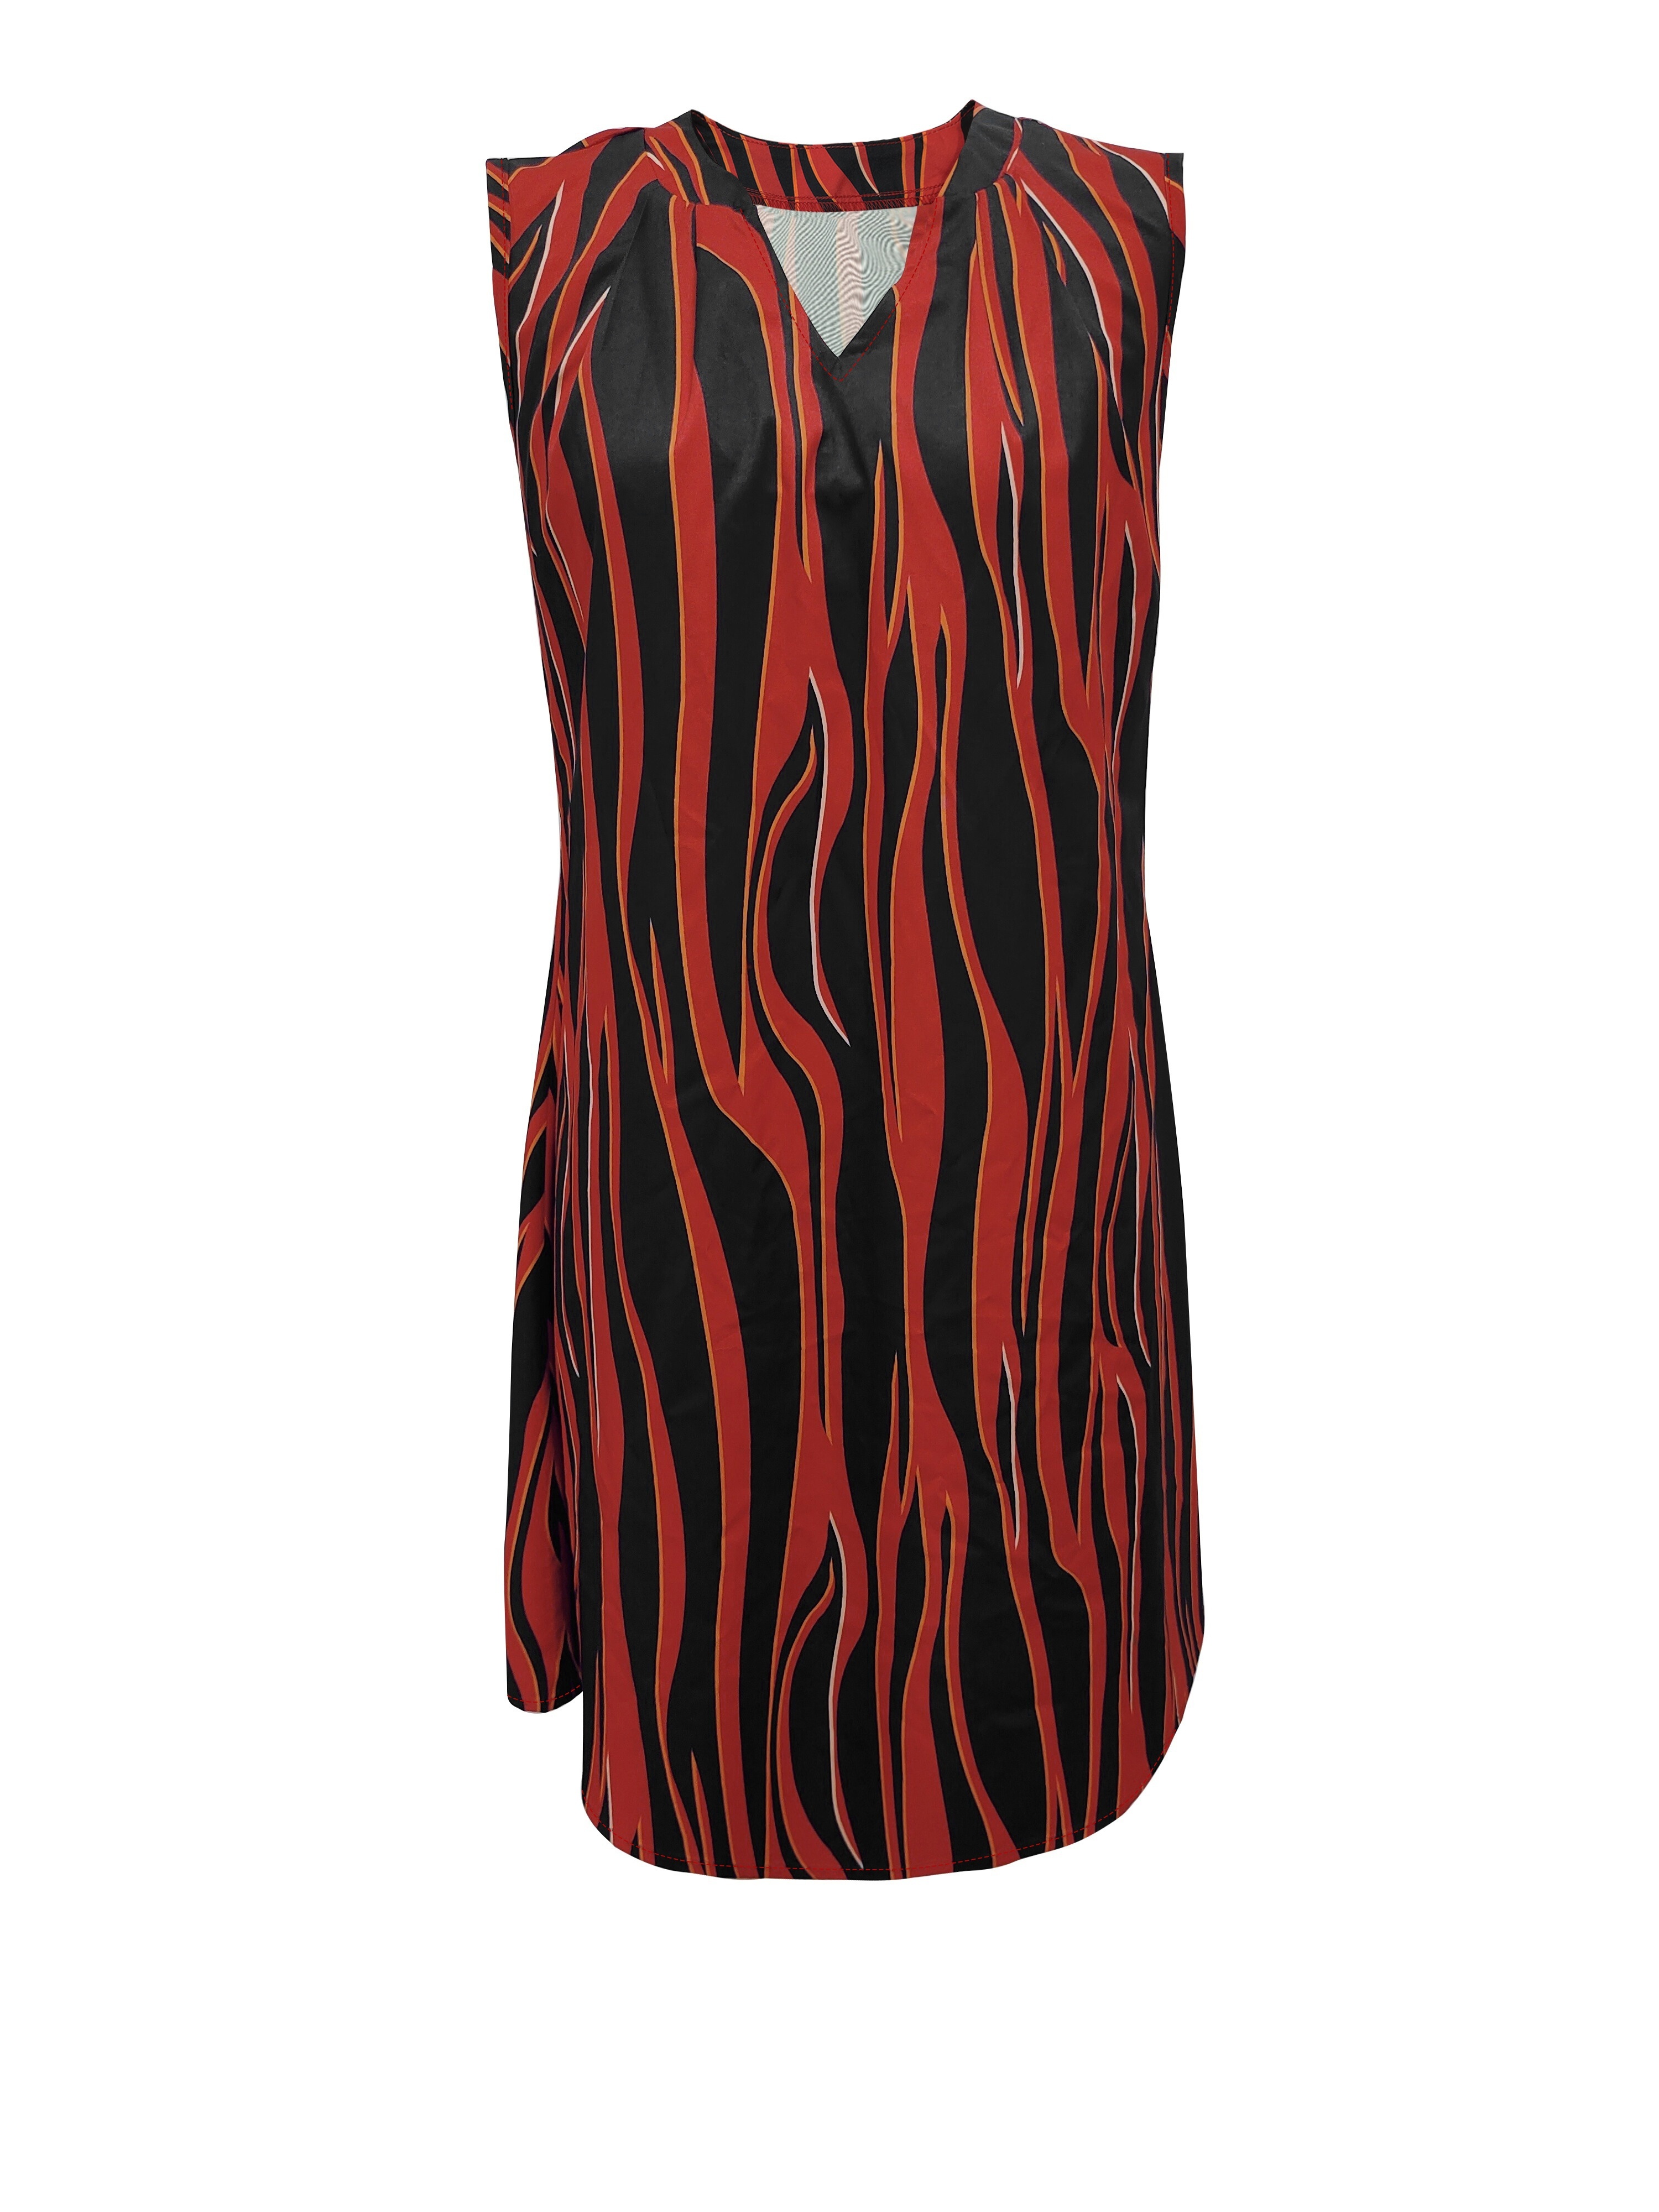 abstract ripple print dress casual v neck sleeveless dress womens clothing details 42